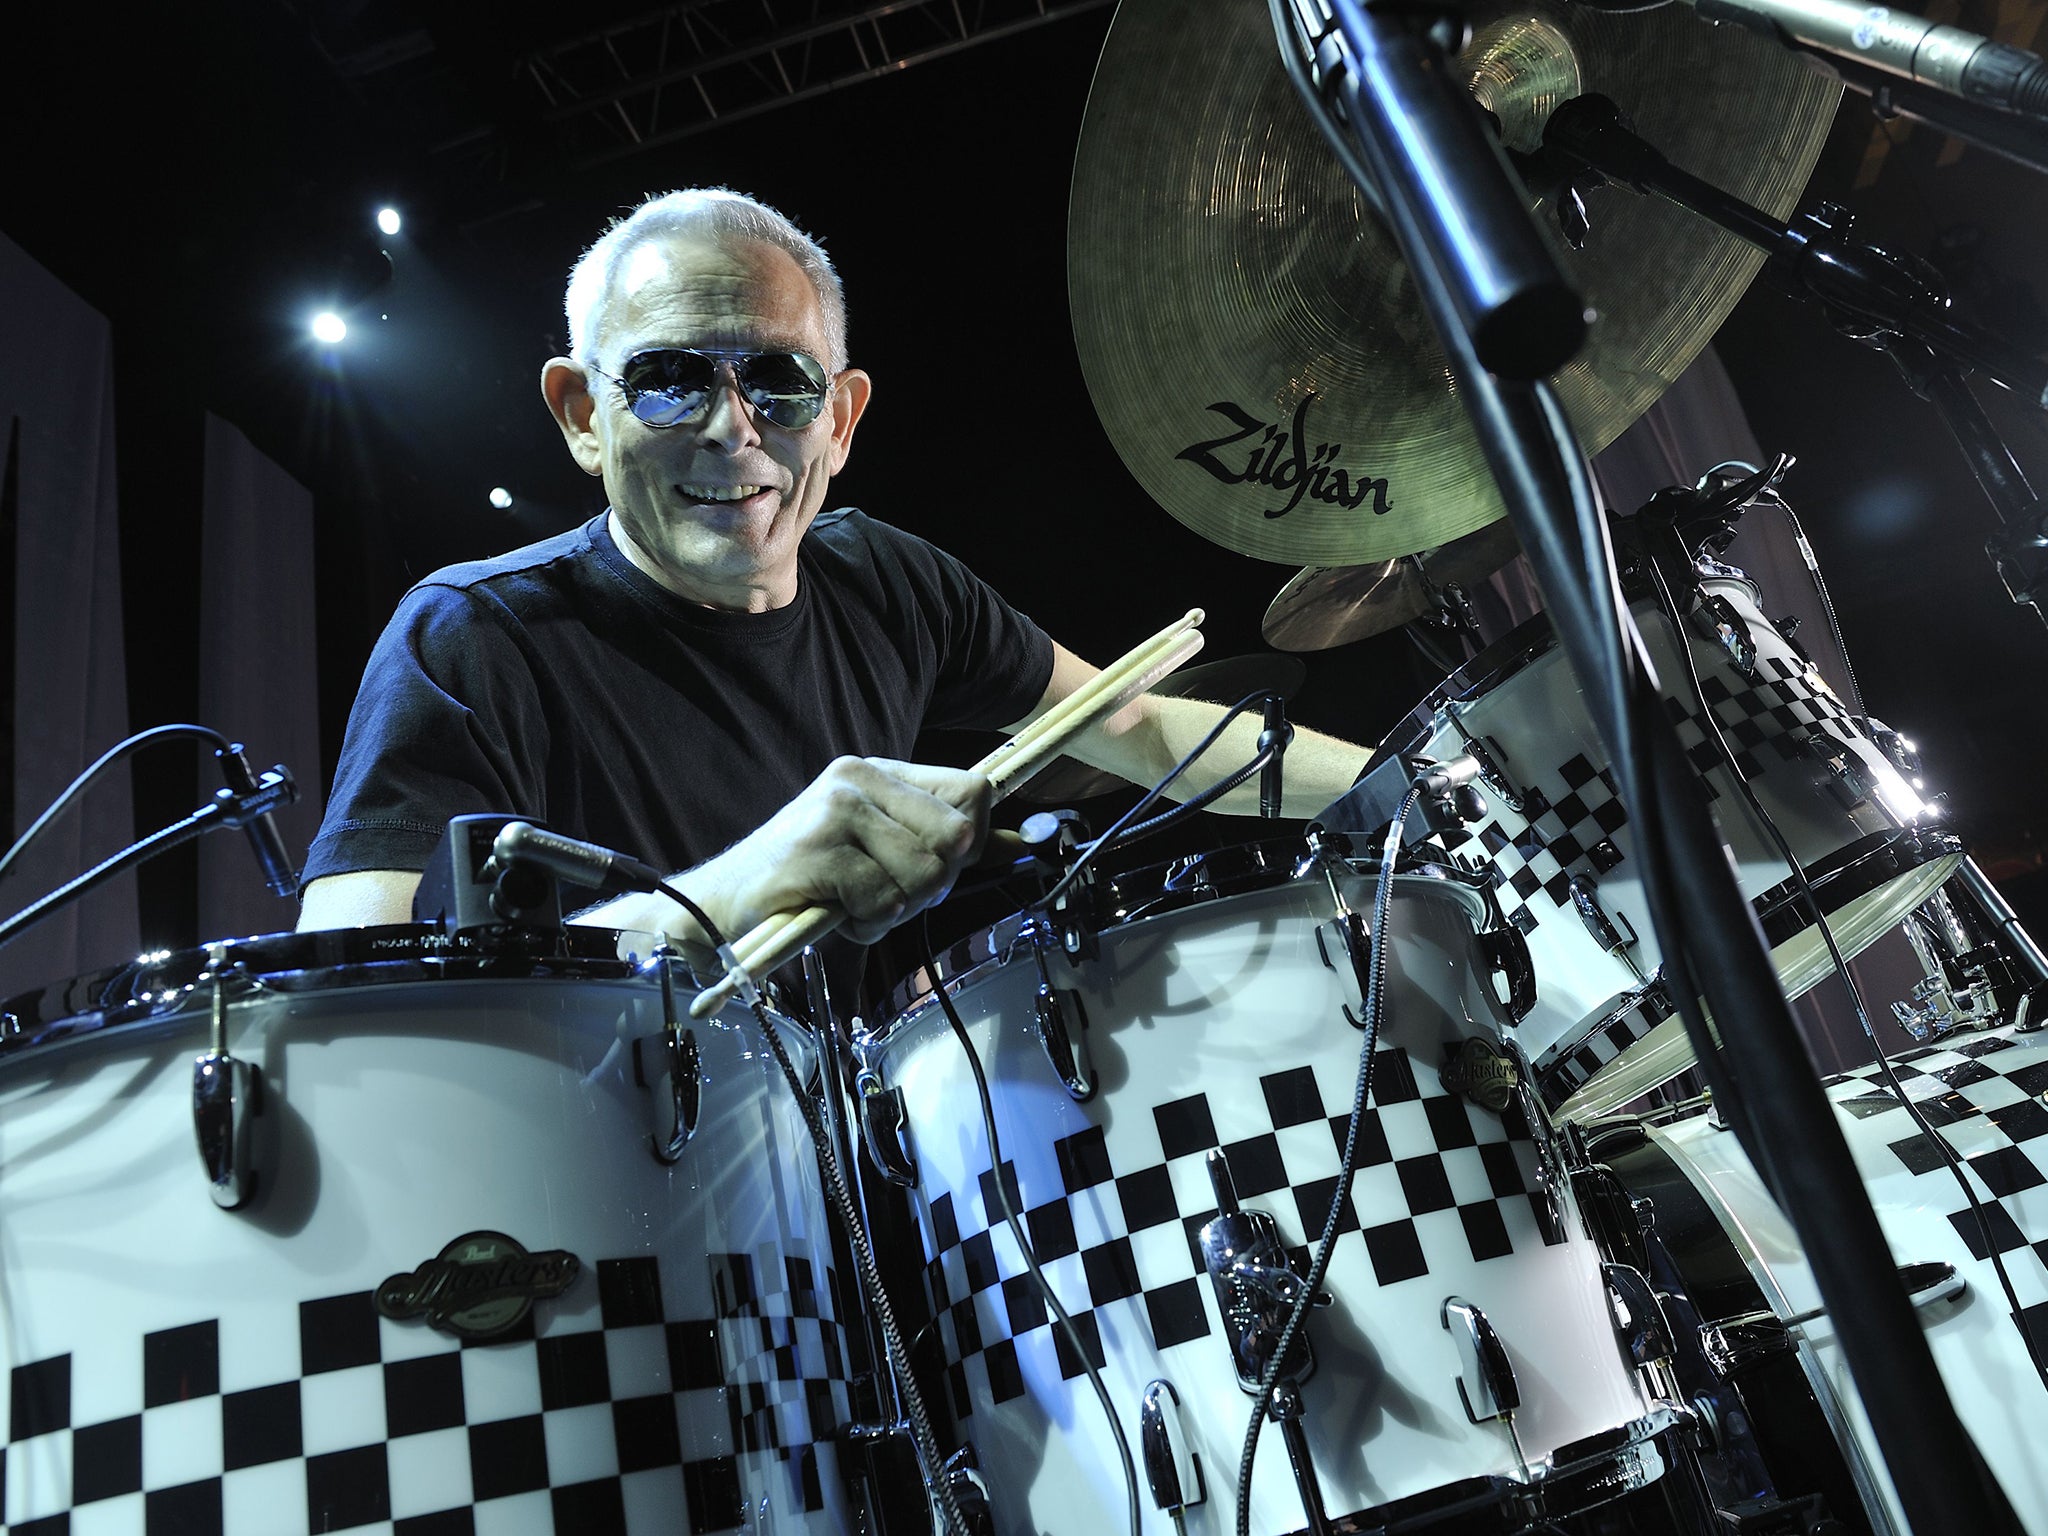 John 'Brad' Bradbury, drummer for the Specials, has died aged 62